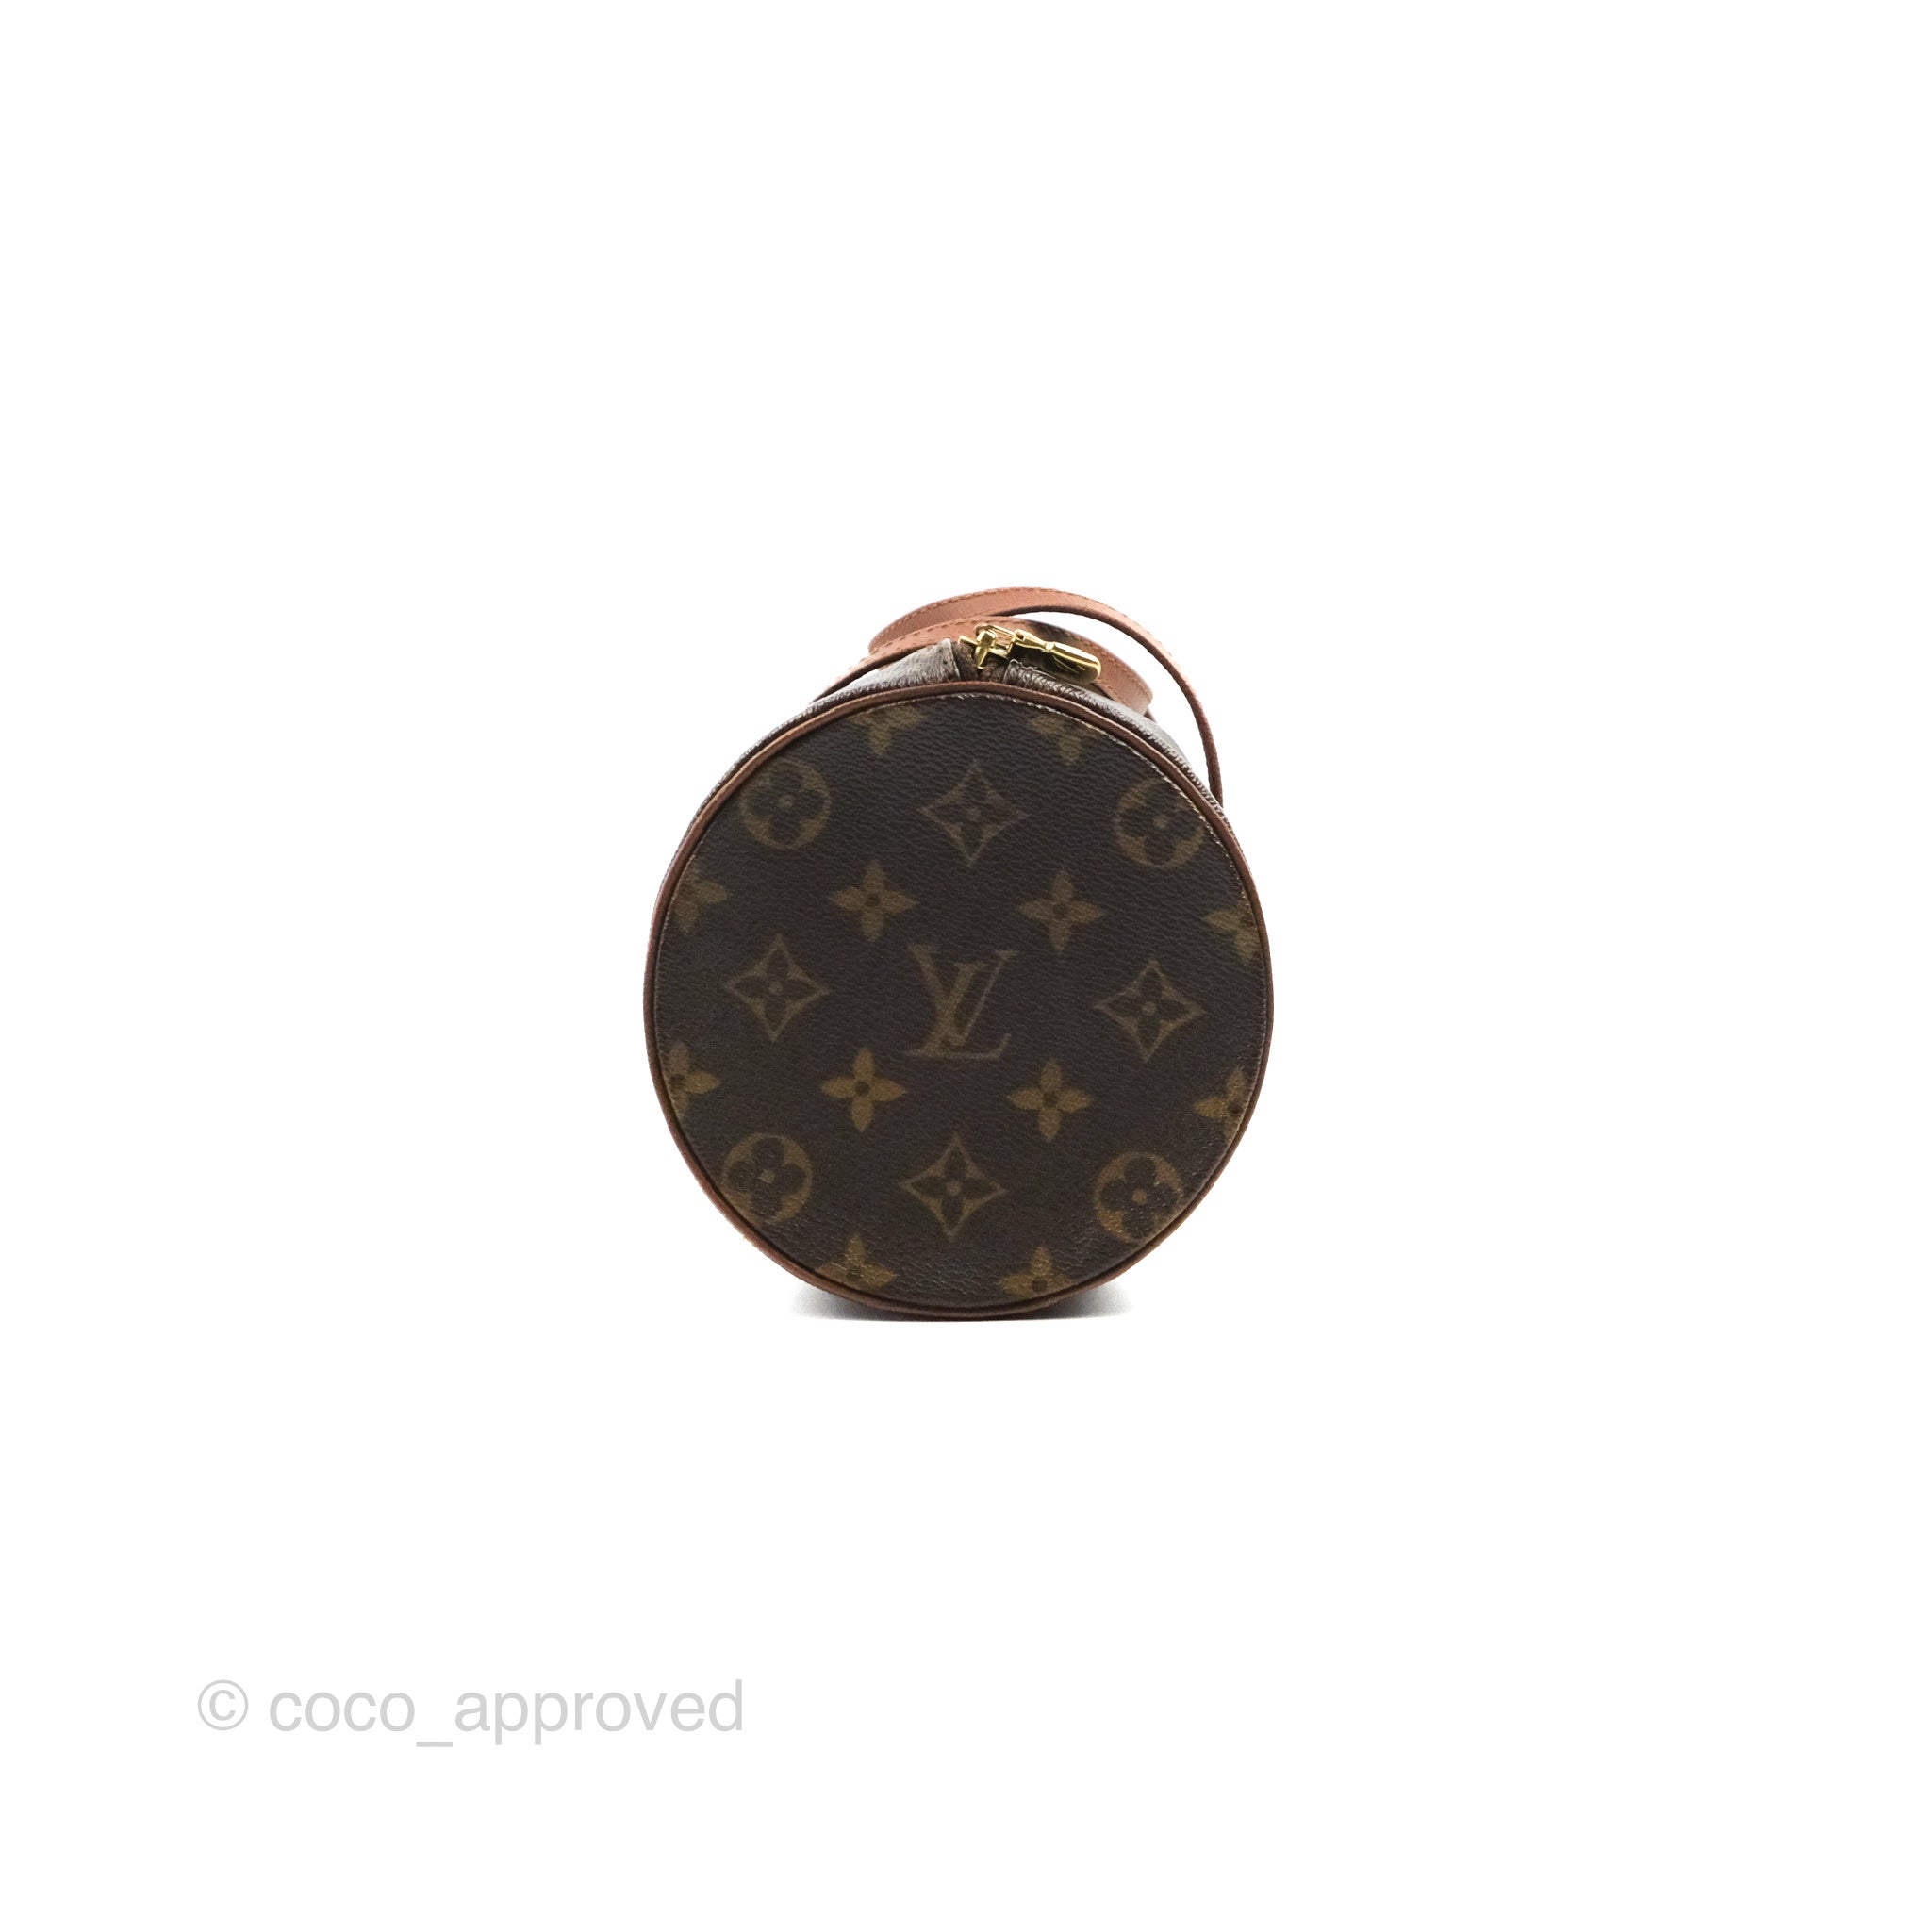 Lv mini round bag